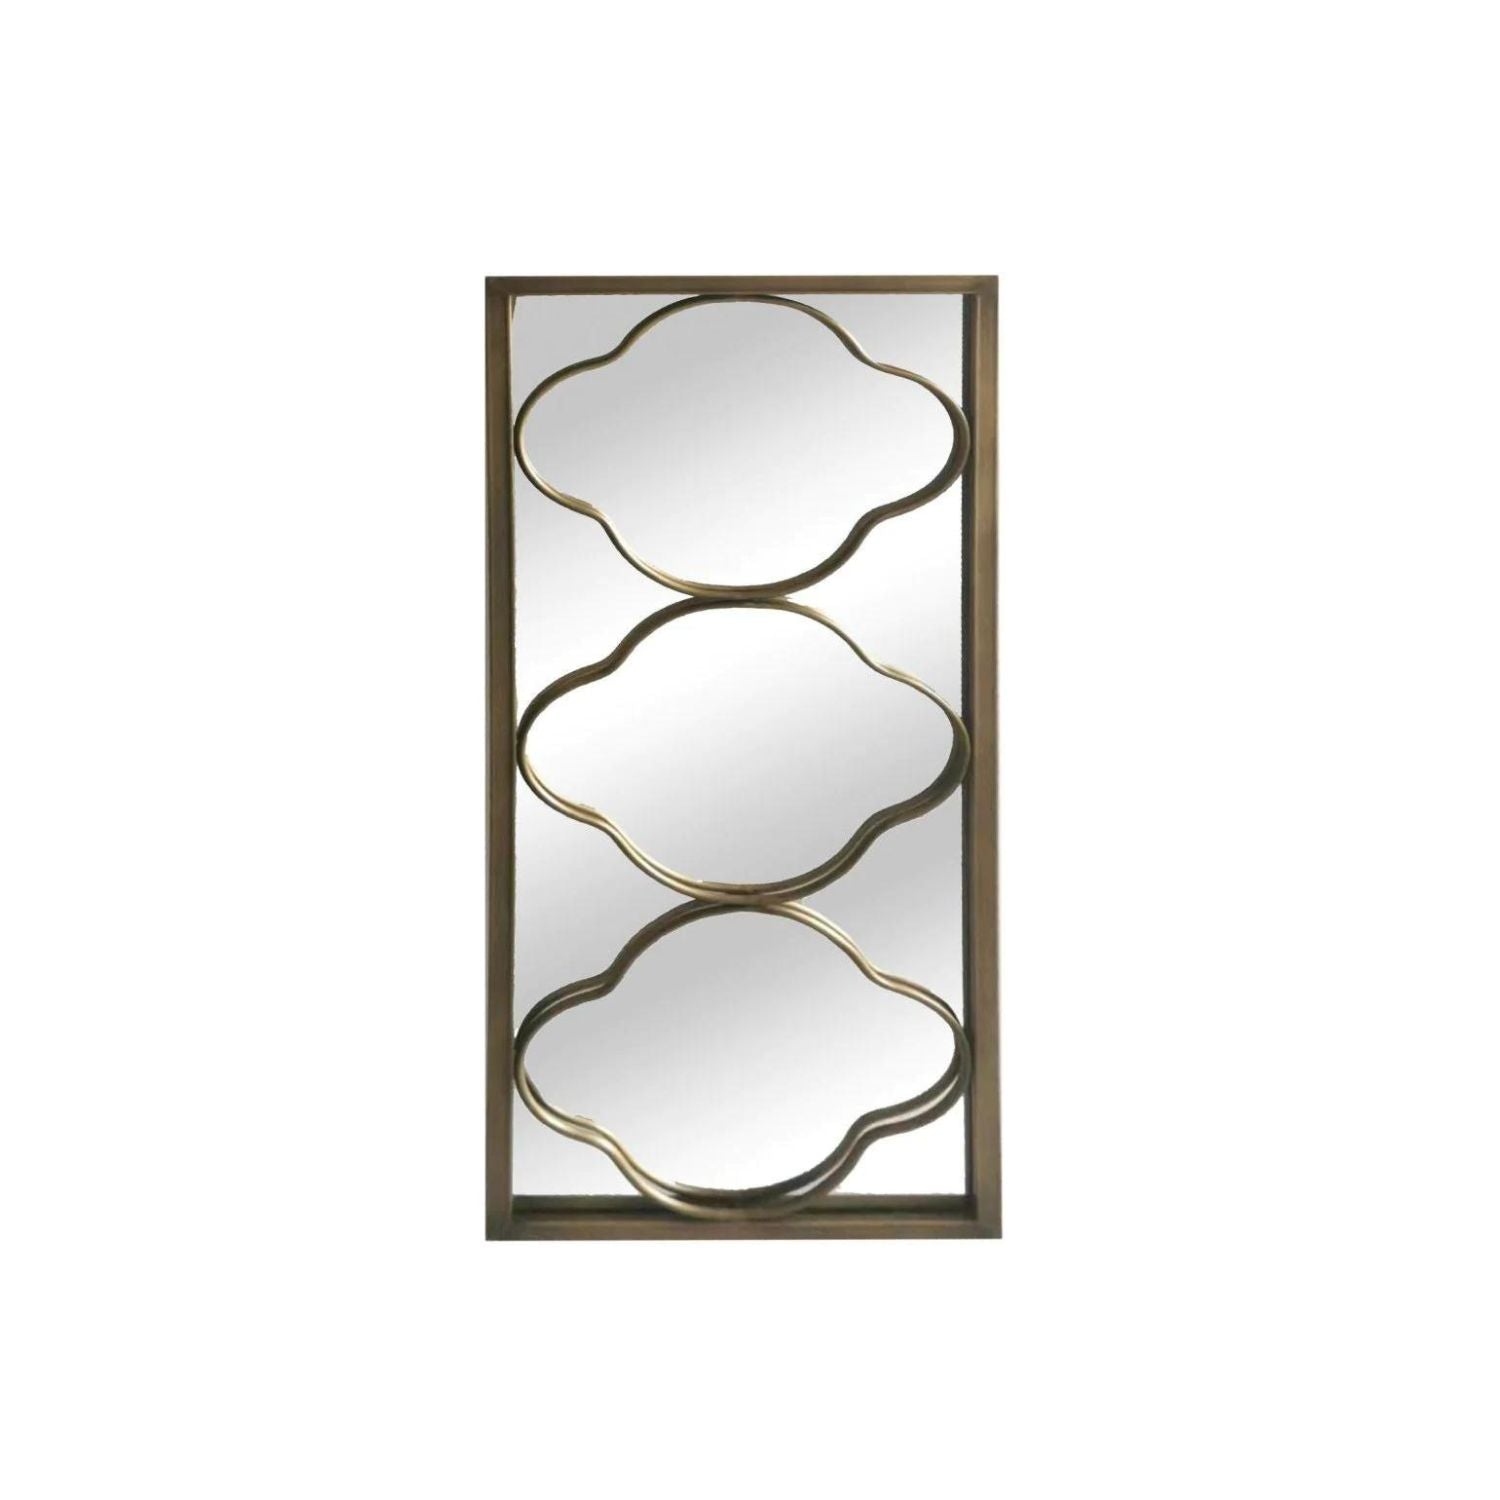 Gold Rectangular Wall Mirror with an art deco design